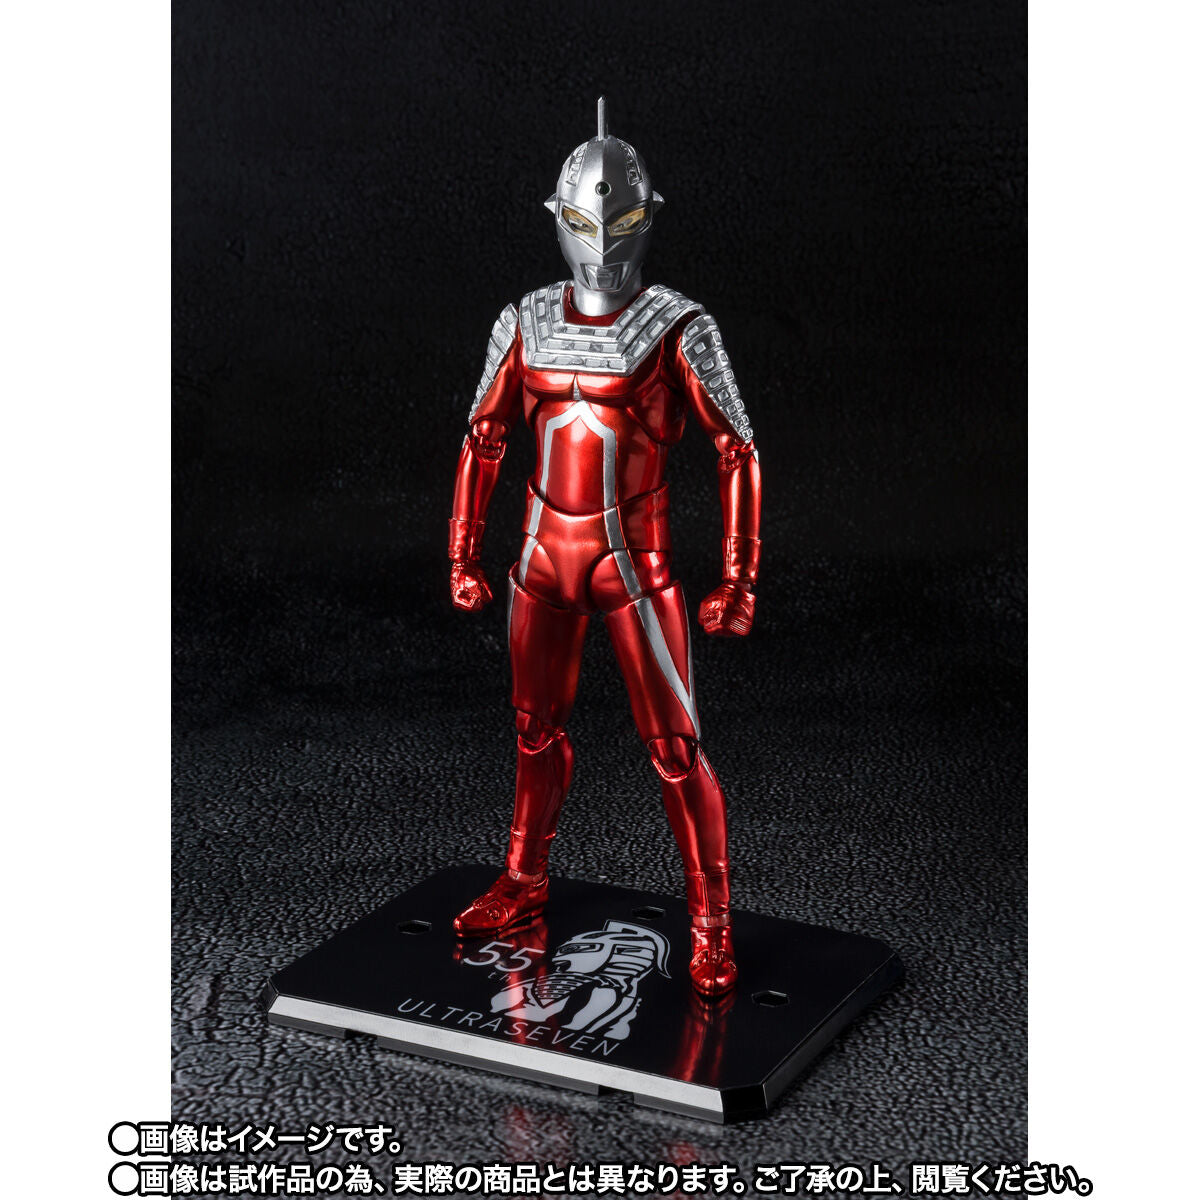 SH Figuarts/ Premium Bandai/ Tamashii Nation Ultraman Set 55th Anniversary Ver. Ultraseven Action Figure. Japan P-BANDAI Web Exclusive. 